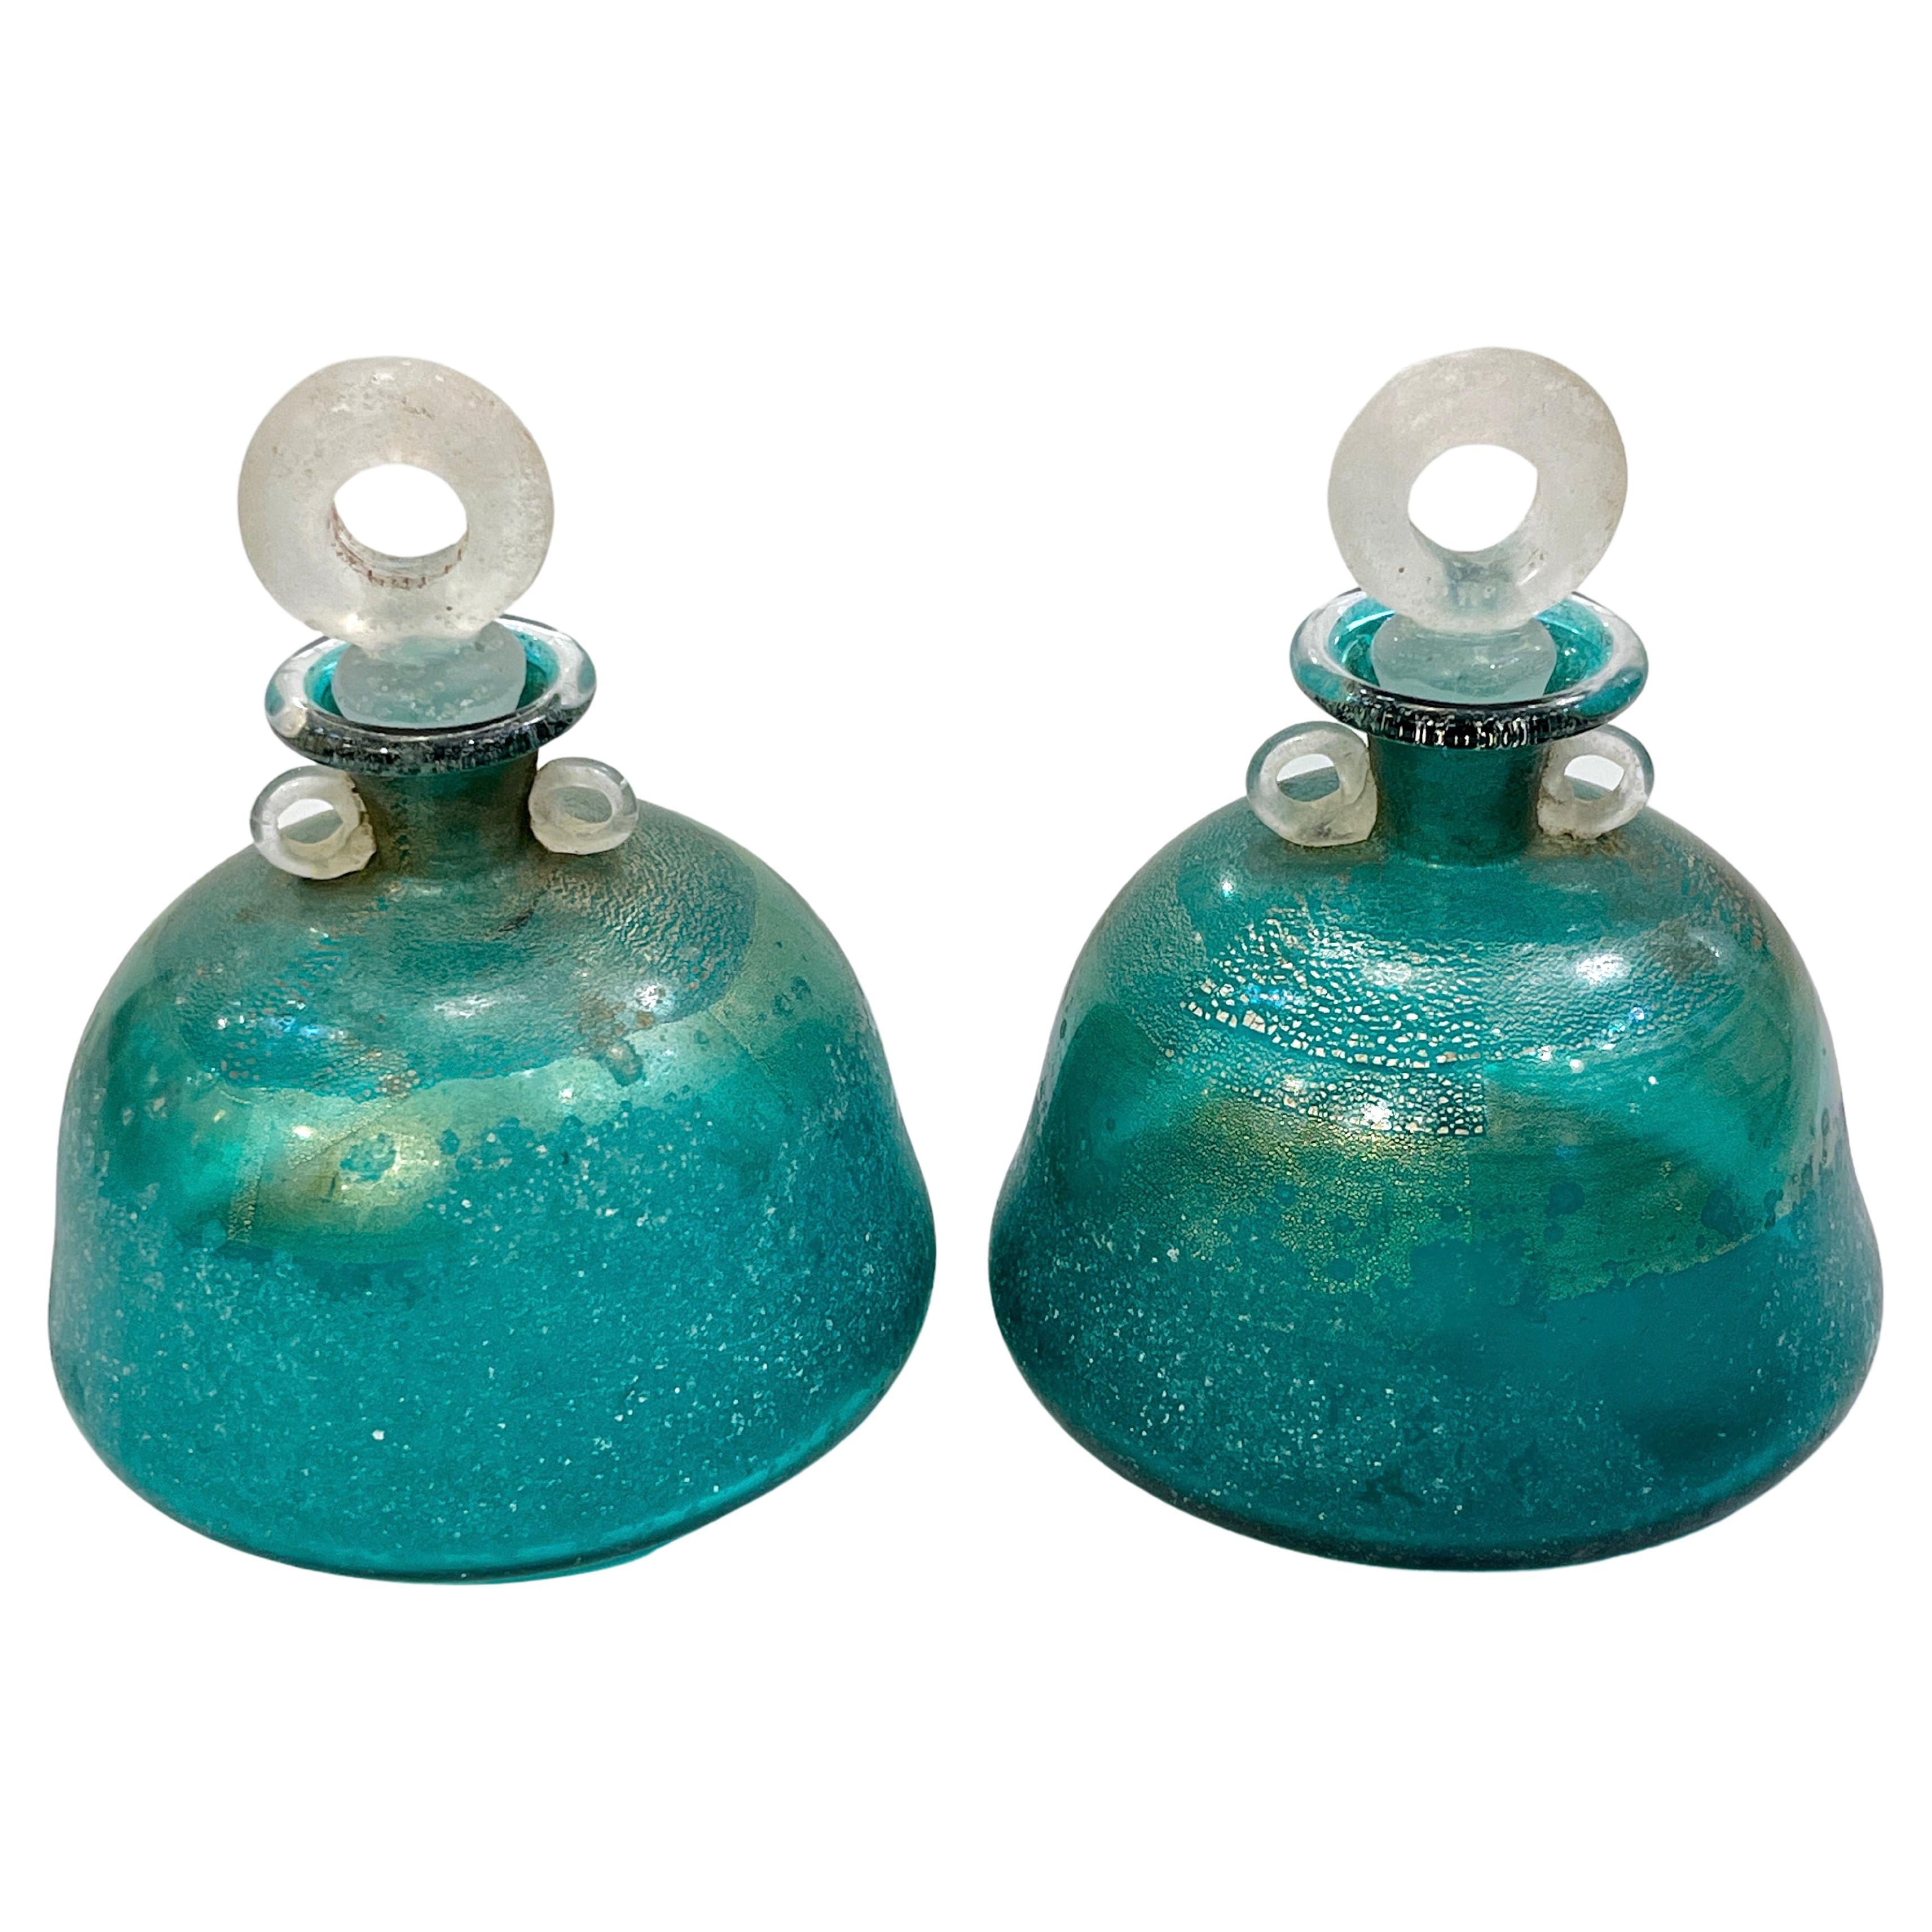 1970 Italian Signed Scavo Murano Glass Green Bottles with Handles and Stoppers (Bouteilles vertes en verre de Murano signées Scavo avec poignées et bouchons)